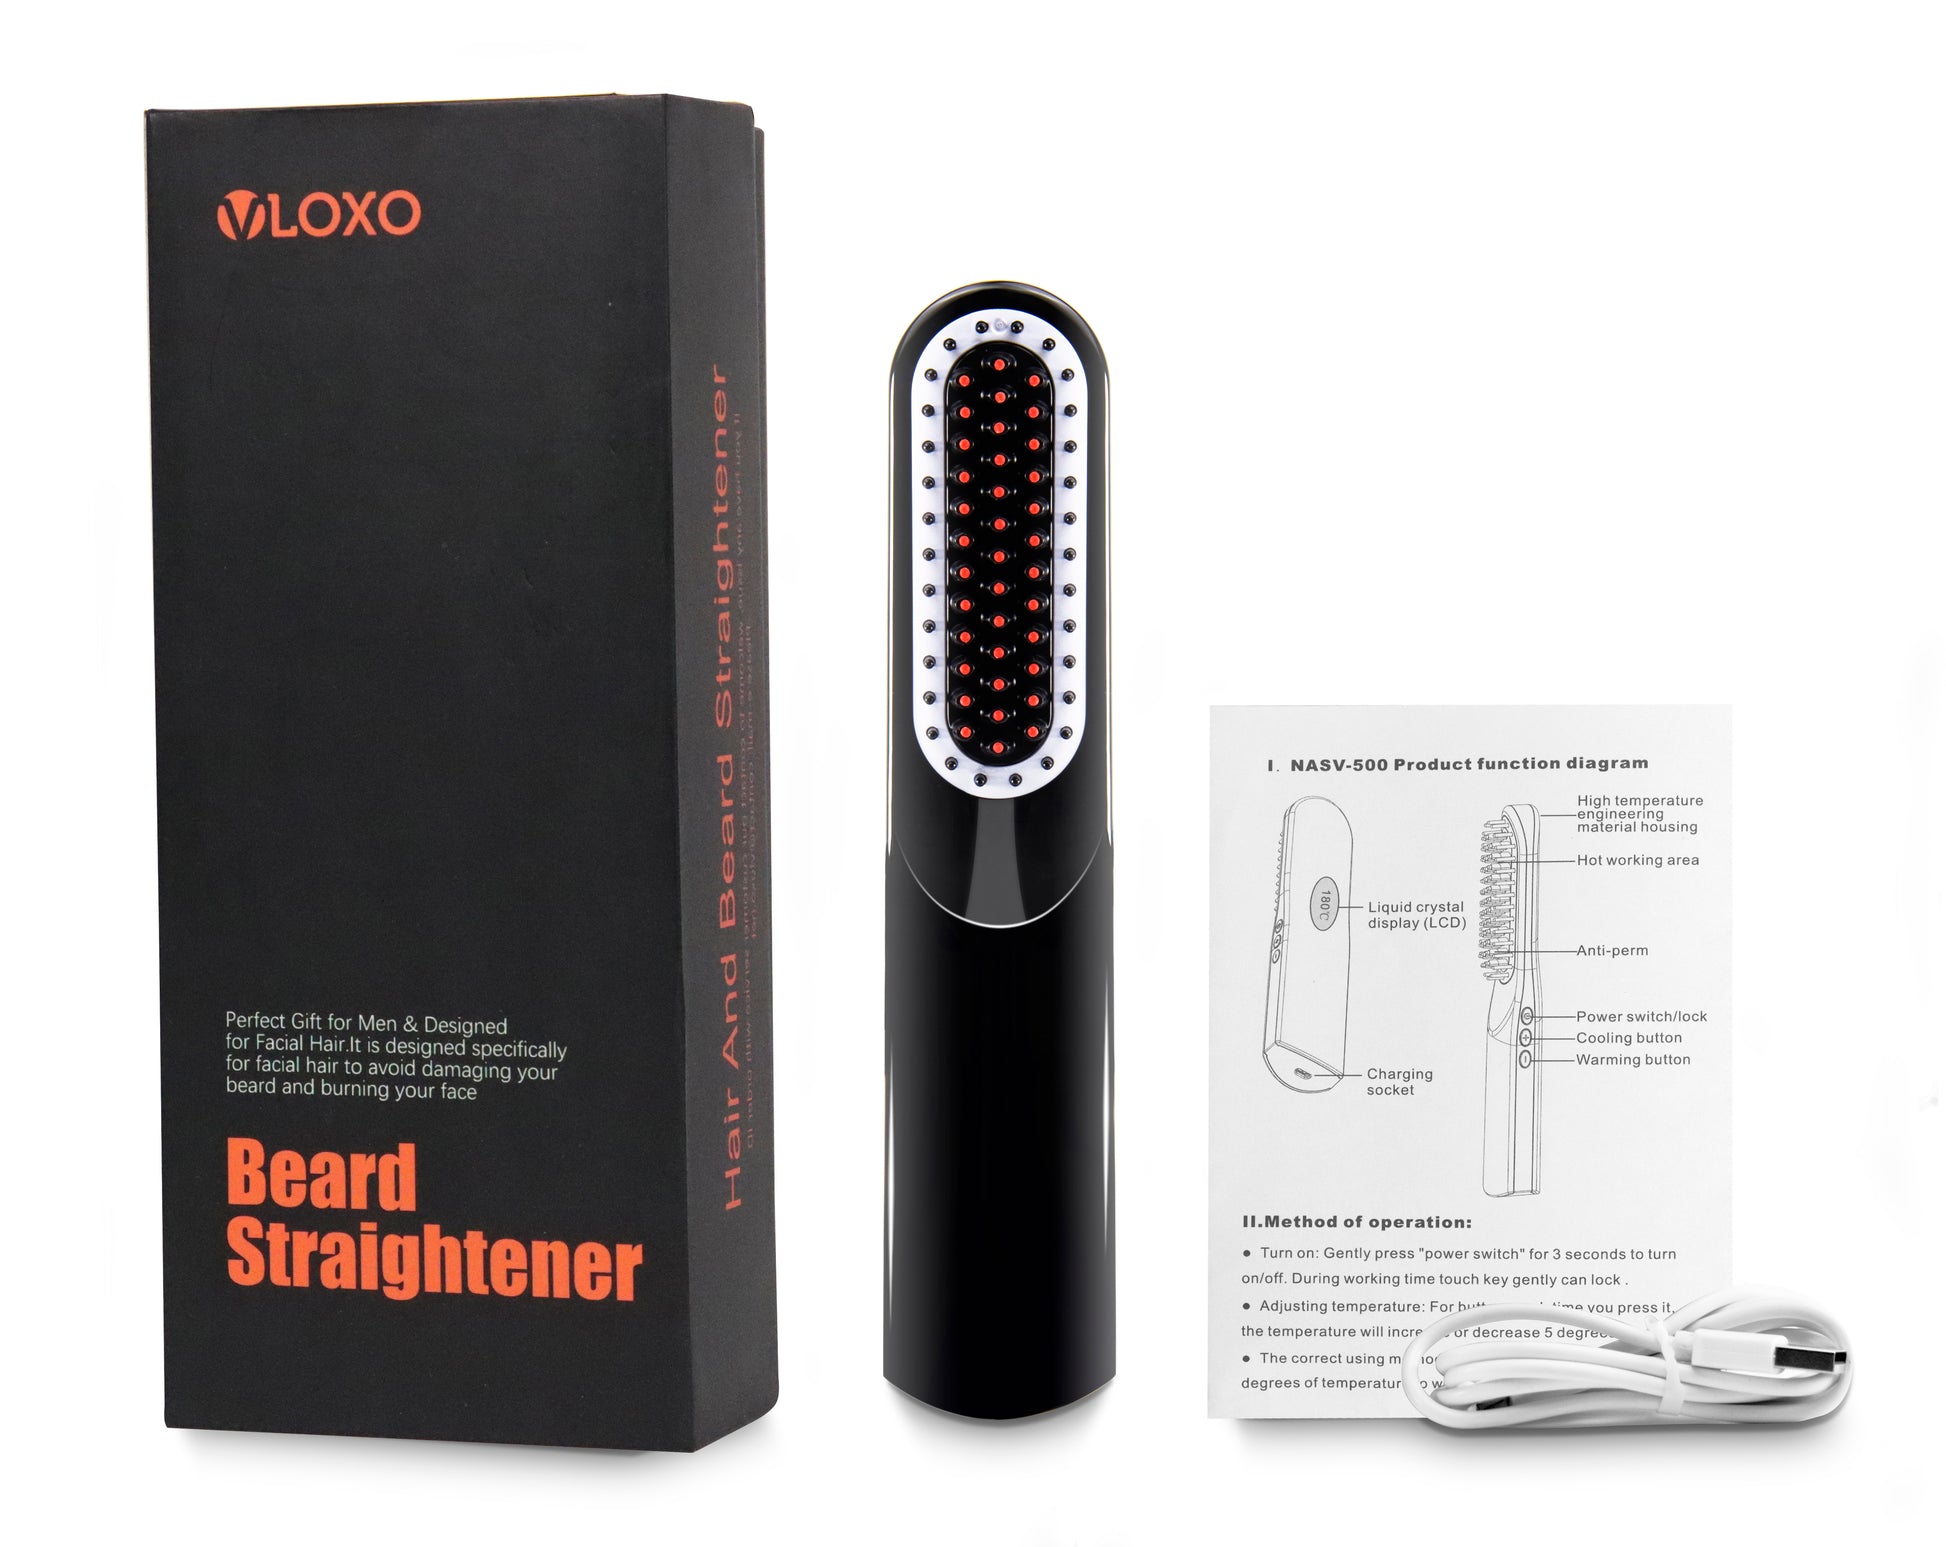 VLOXO Beard Straightener